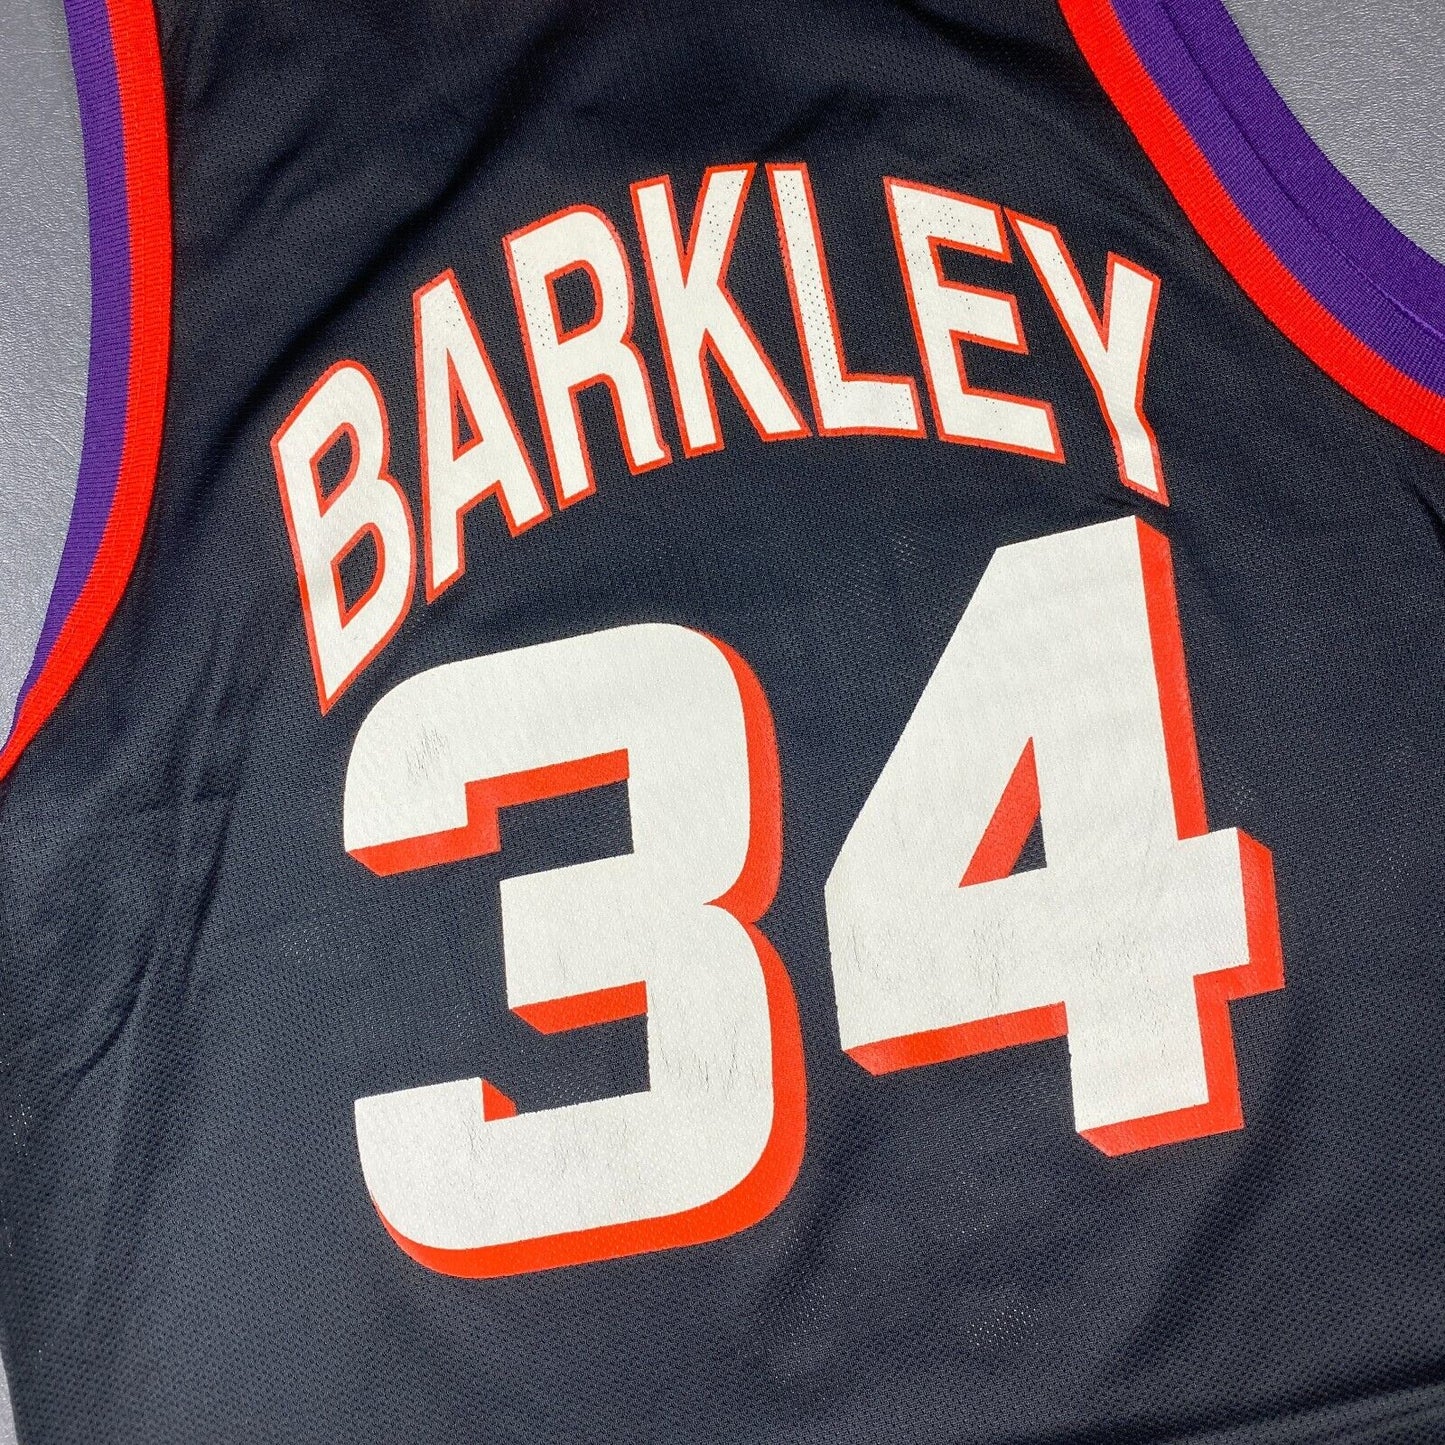 100% Authentic Charles Barkley Vintage Champion Suns Jersey Size 44 M L